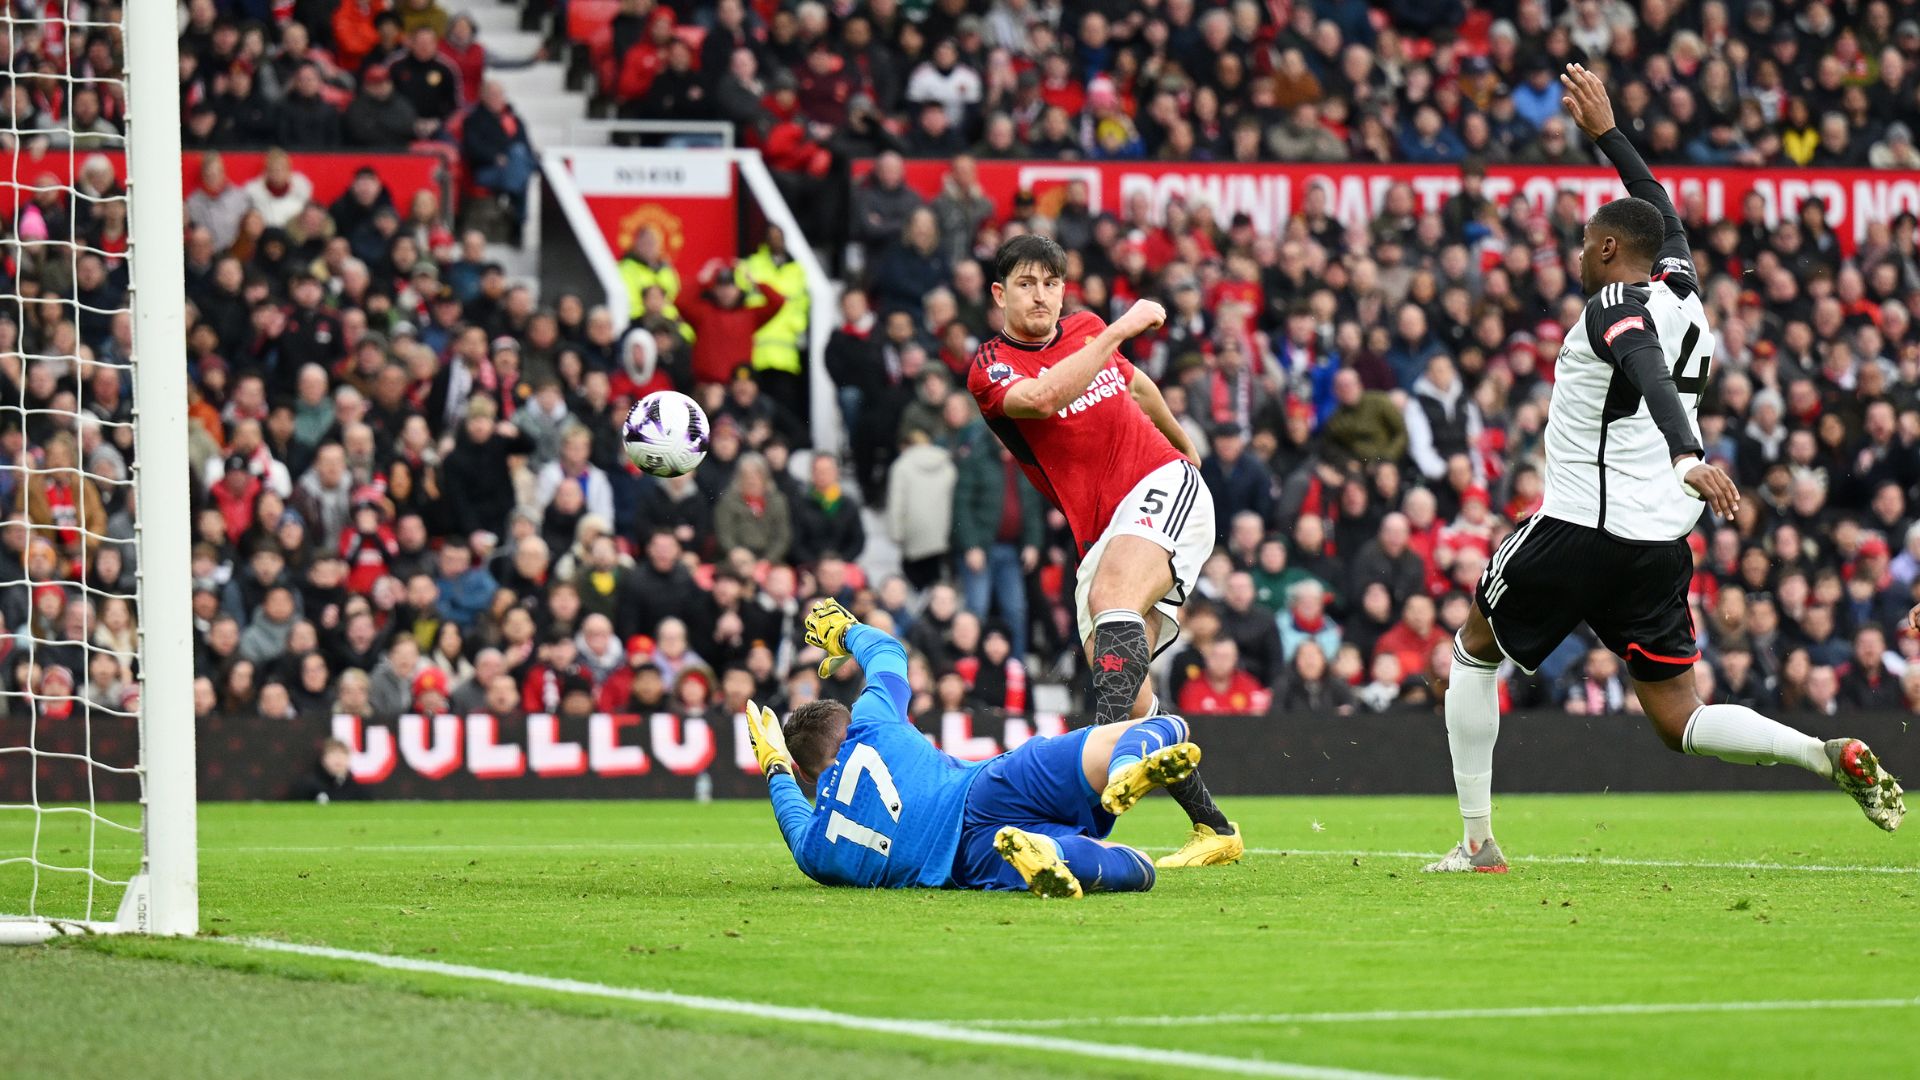 Momento do gol marcado por Maguire (Crédito: Getty Images)